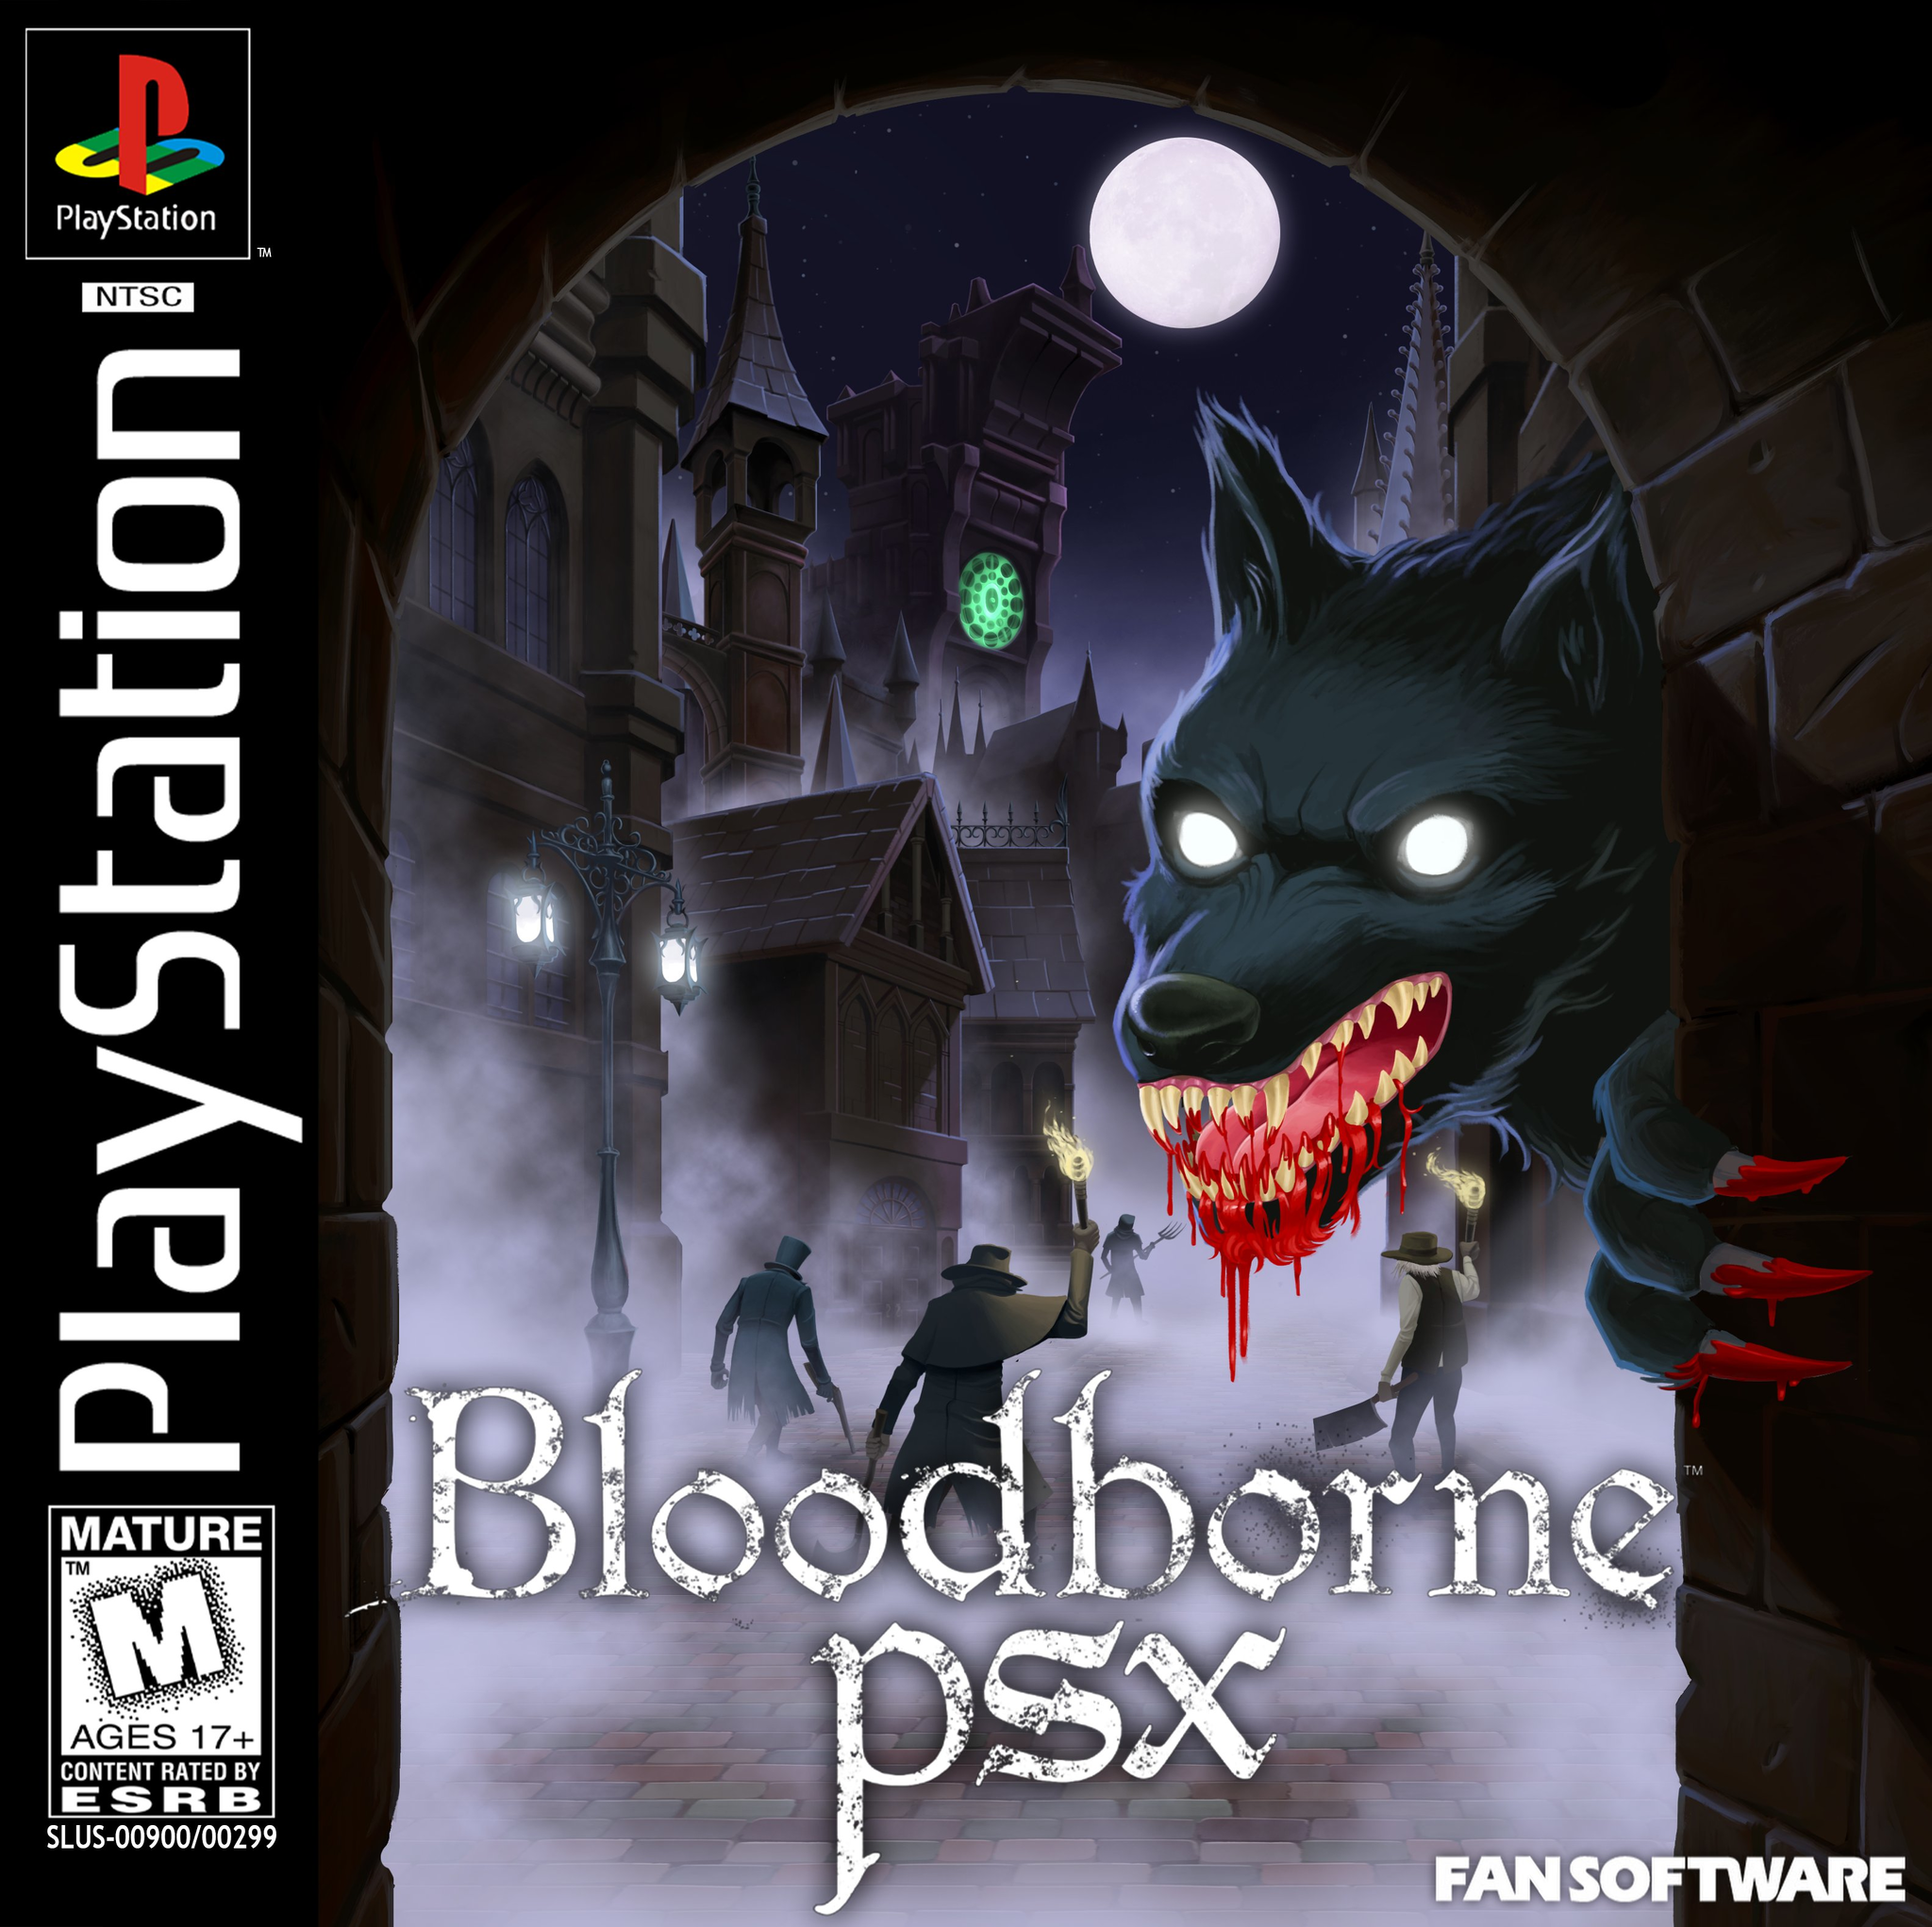 Coverage of Bloodborne PSX